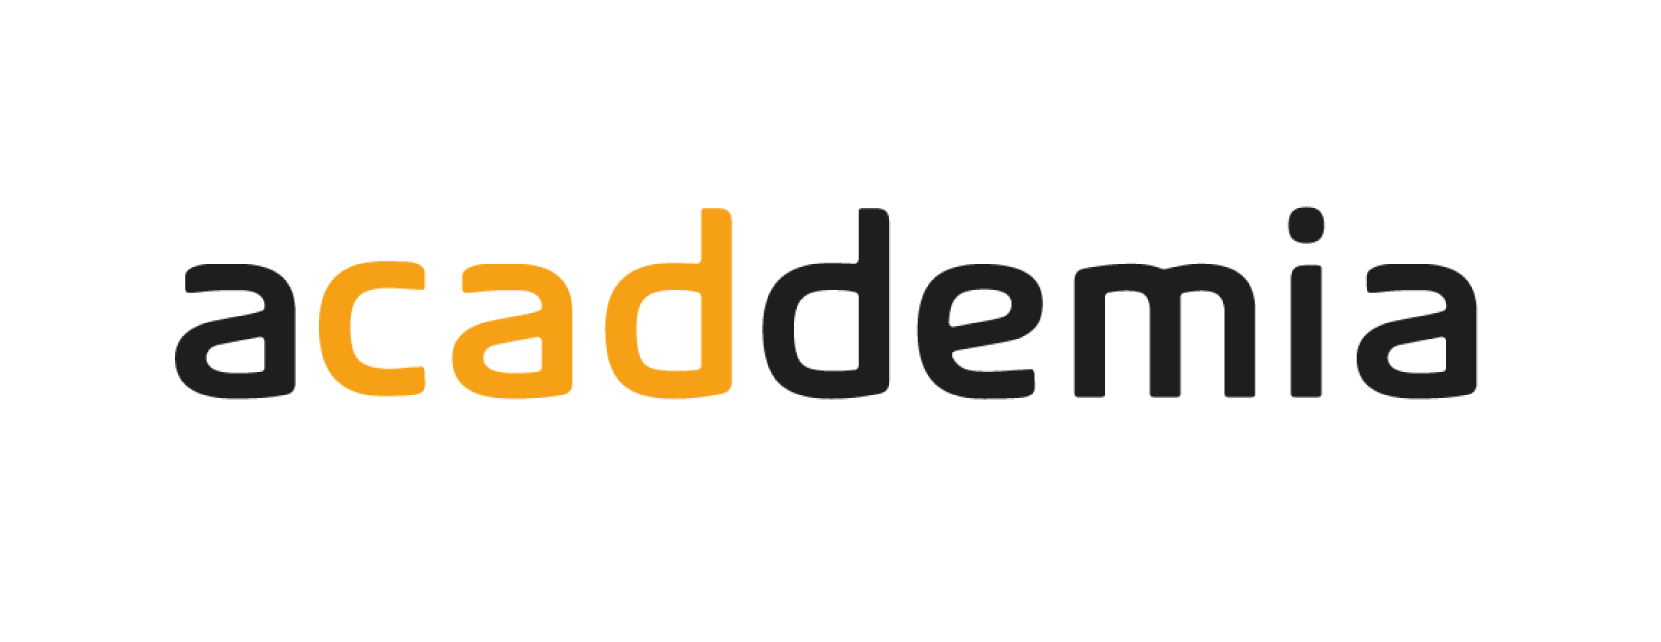 (c) Acaddemia.com